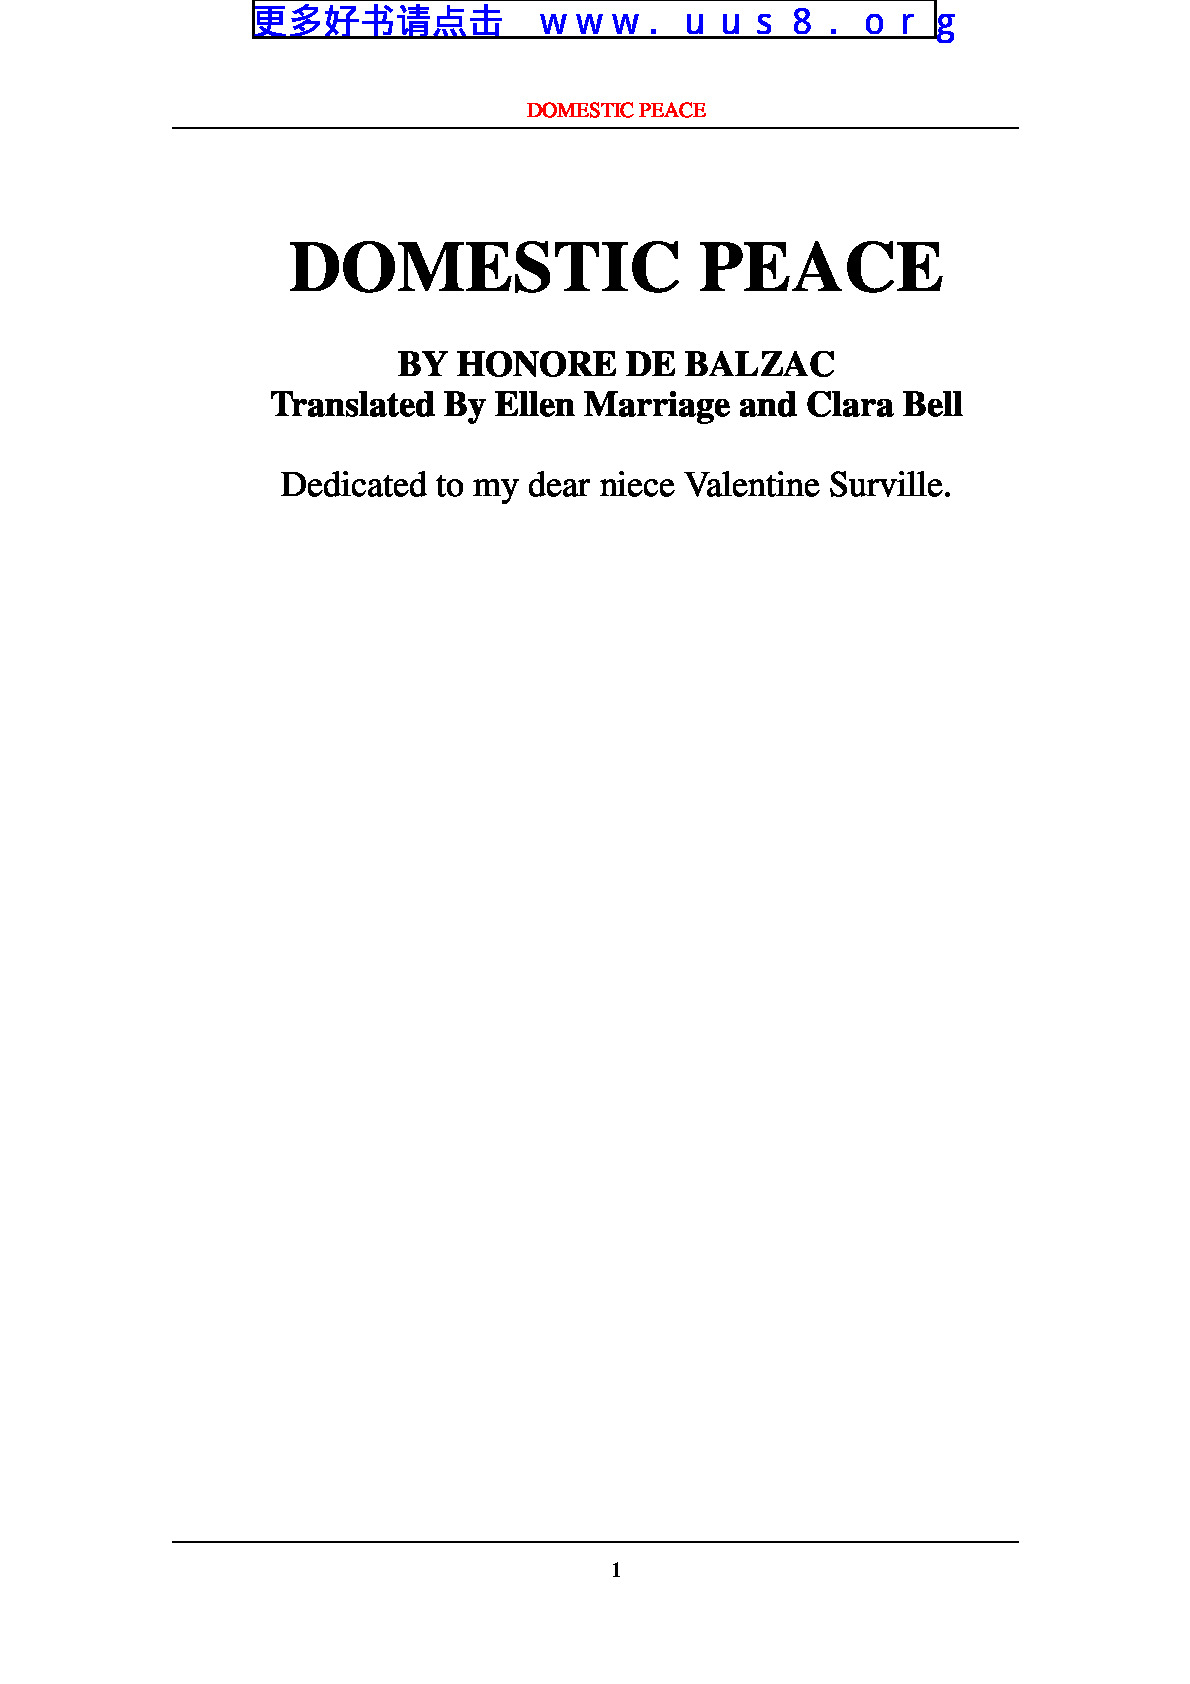 DOMESTIC_PEACE(内务和平)